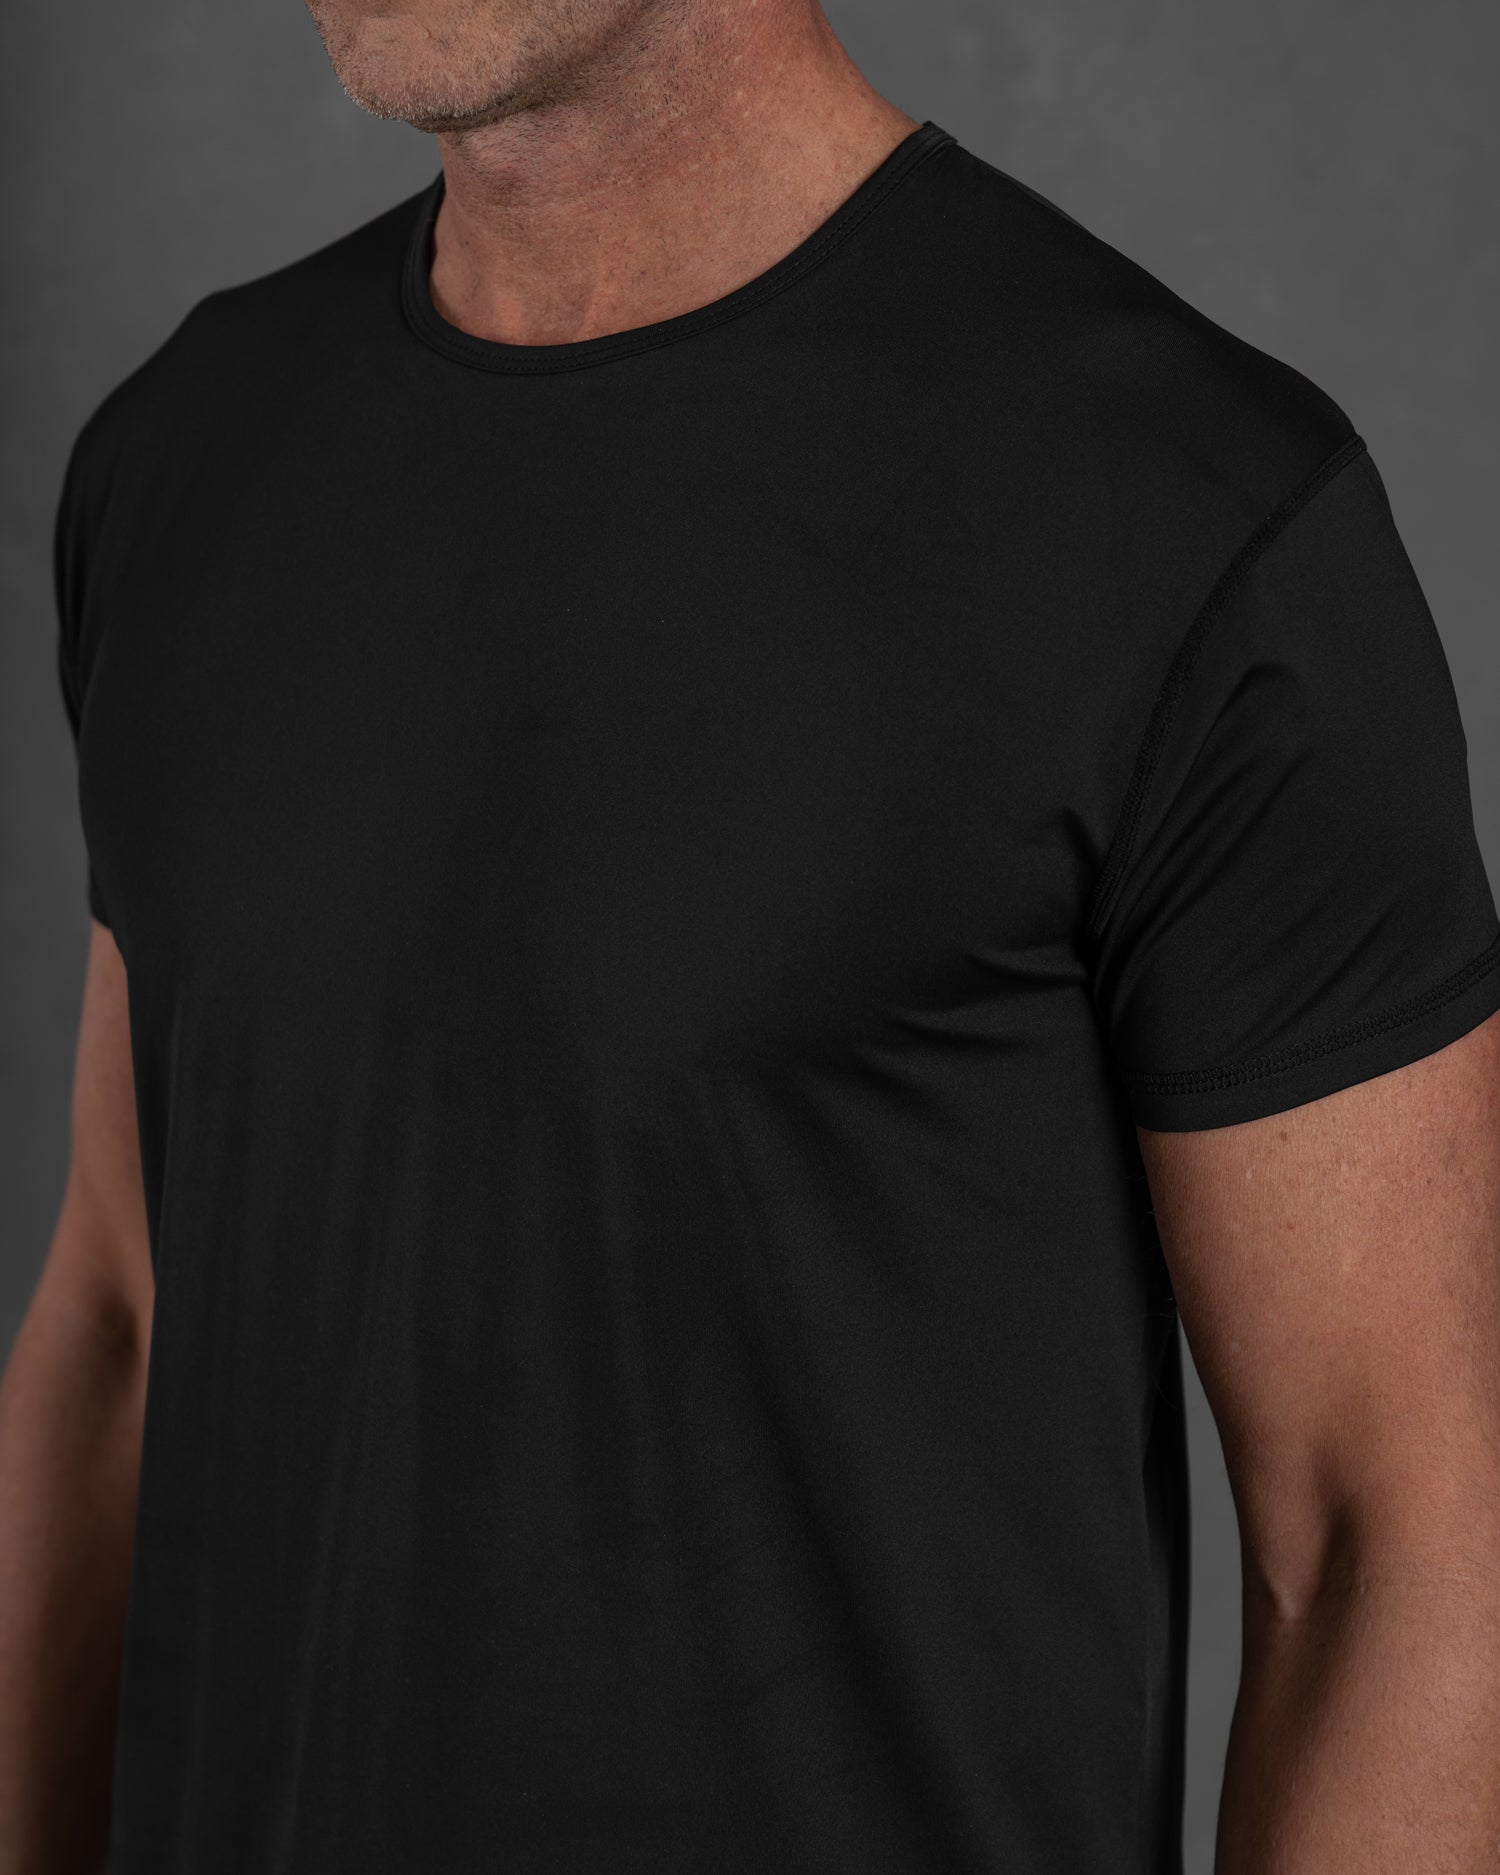 Zero-G Curved T-Shirt: Black